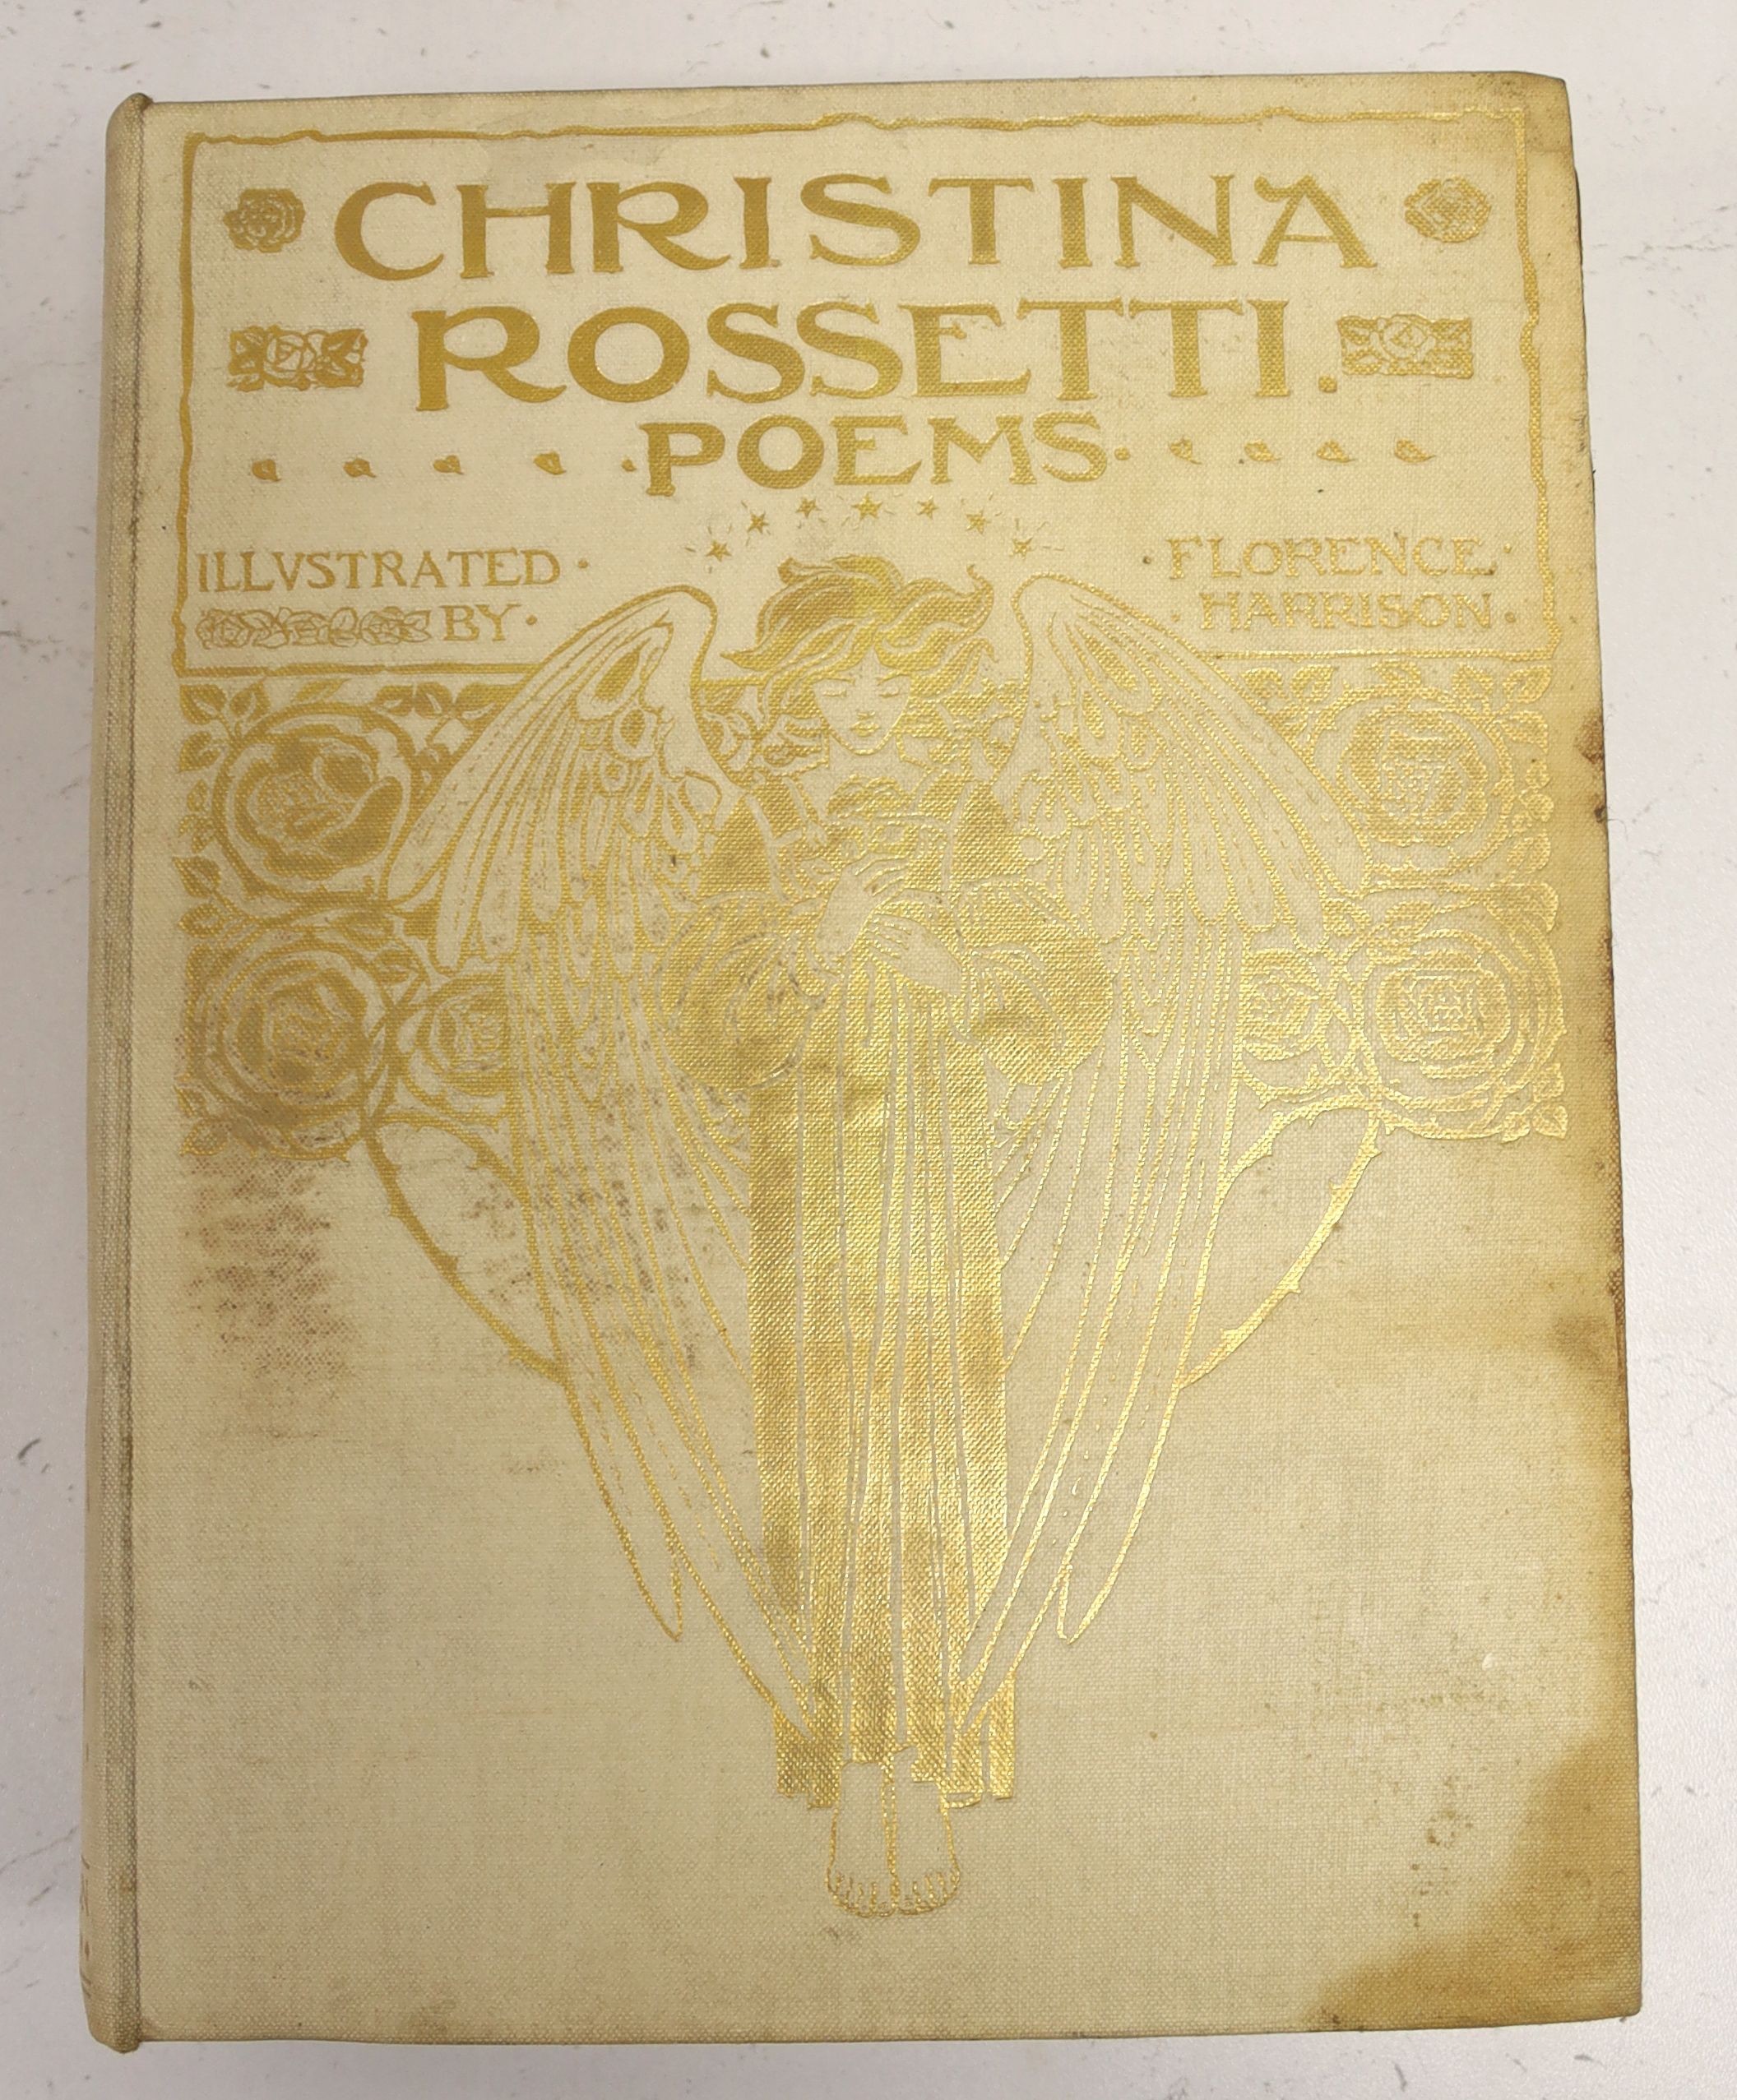 Harrison (Florence, illustrator) - Christina Rossetti Poems, Blackie, pictorial gilt and cream binding